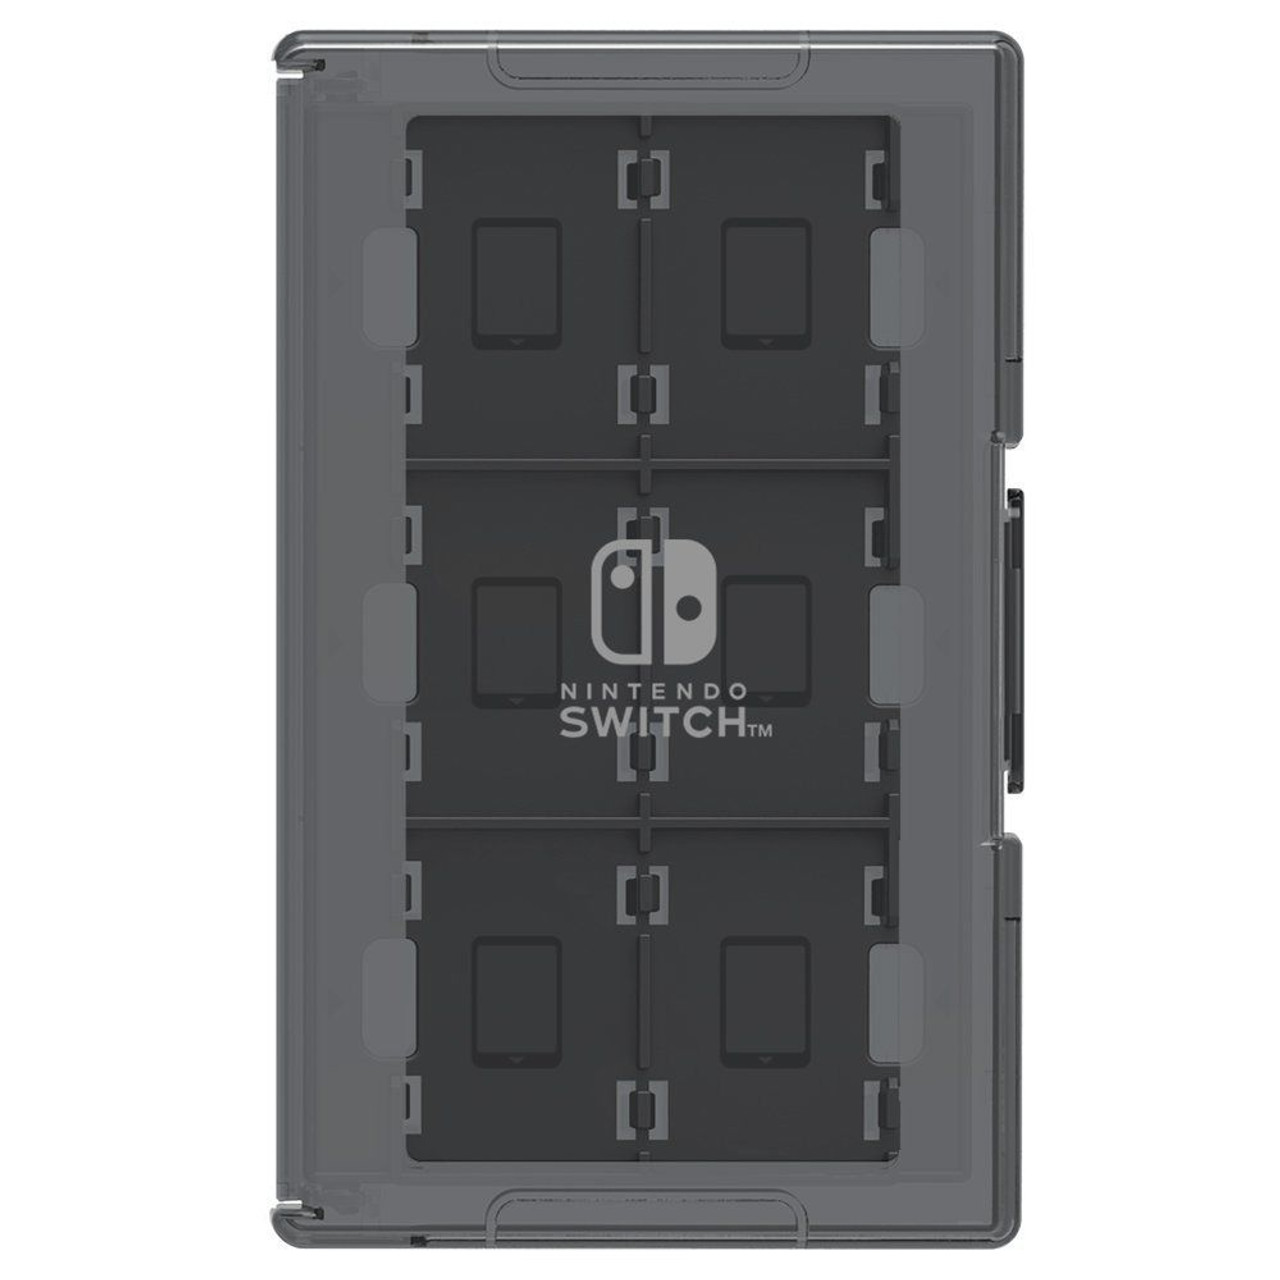 Hori Game Card Case 24+2 Black for Nintendo Switch - Plaza Japan